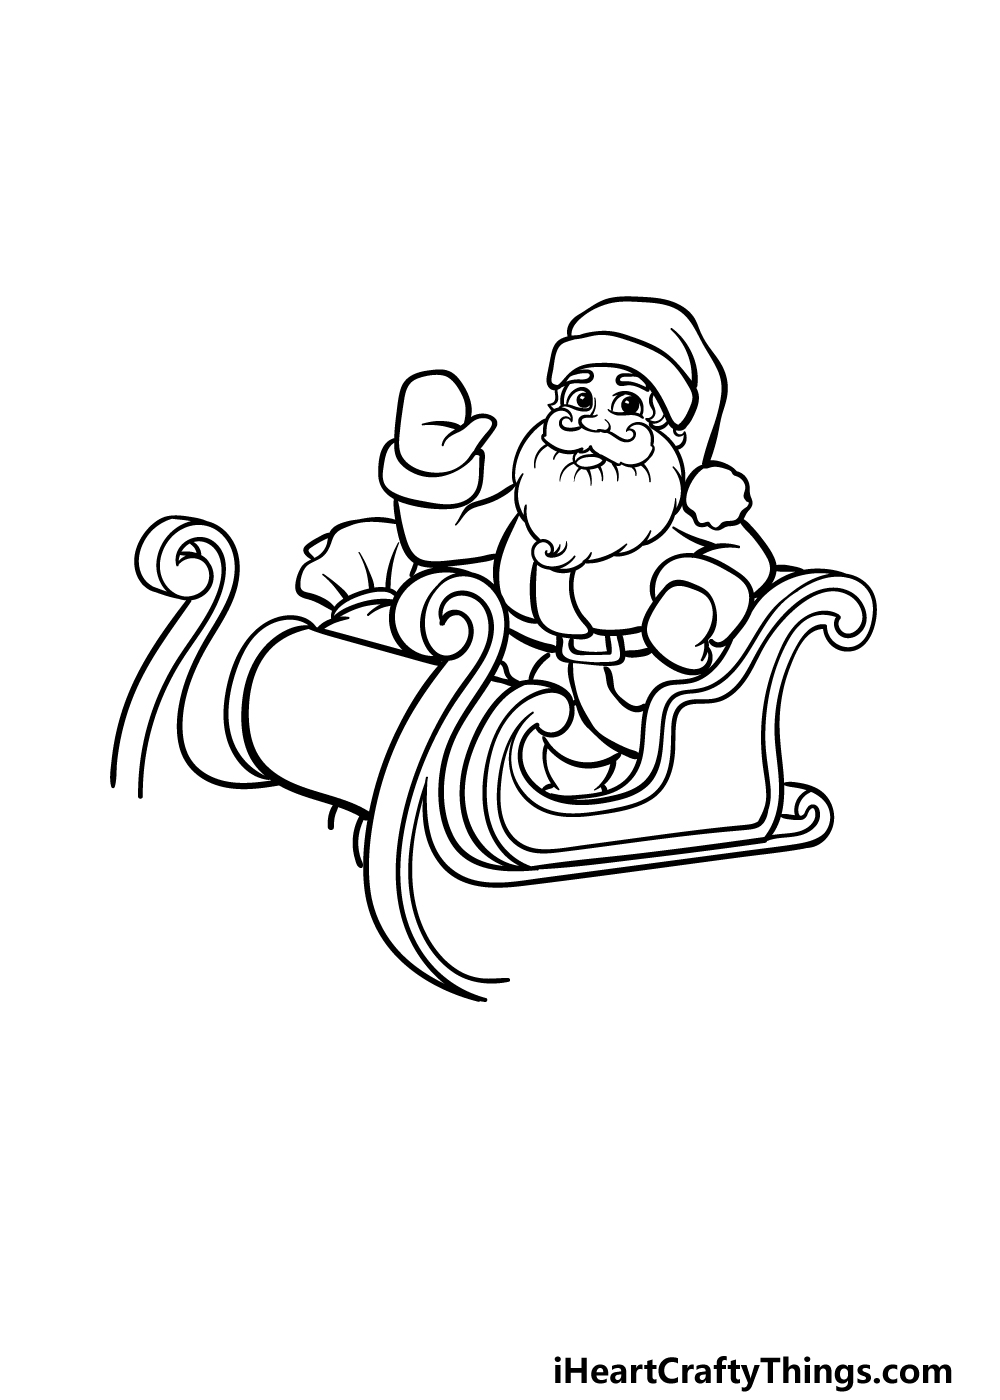 how to draw a Santa Sleigh step 3